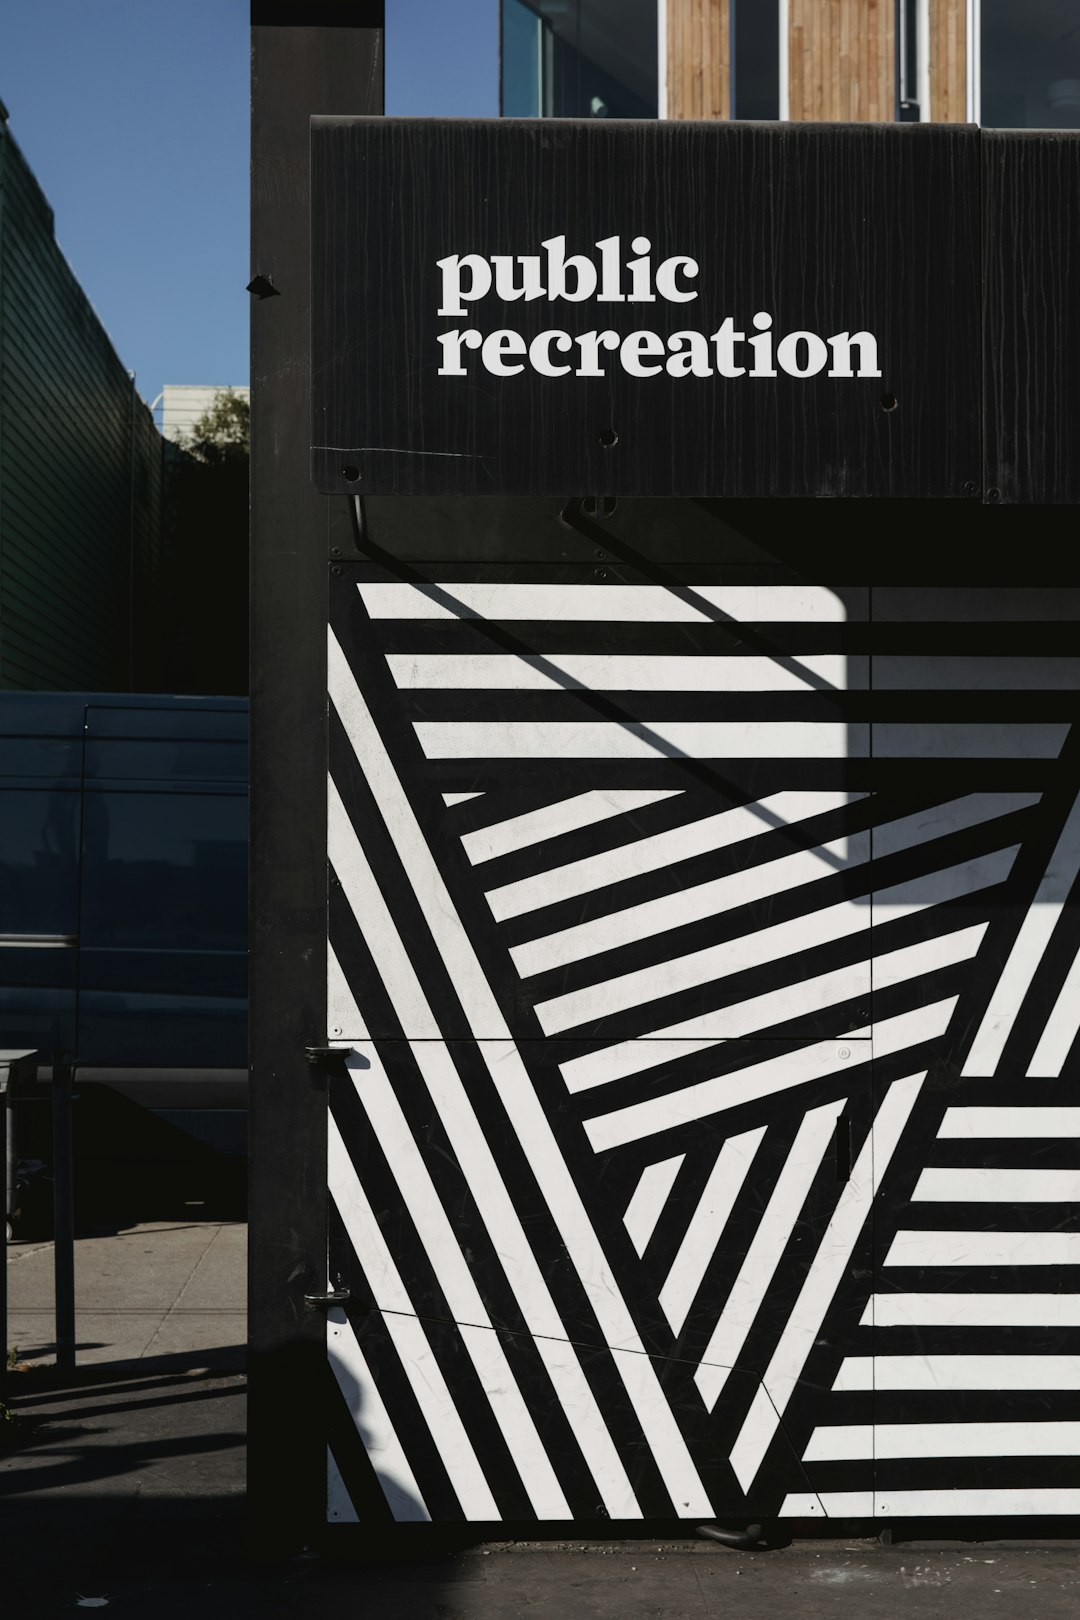 Public Recreation logo on wall